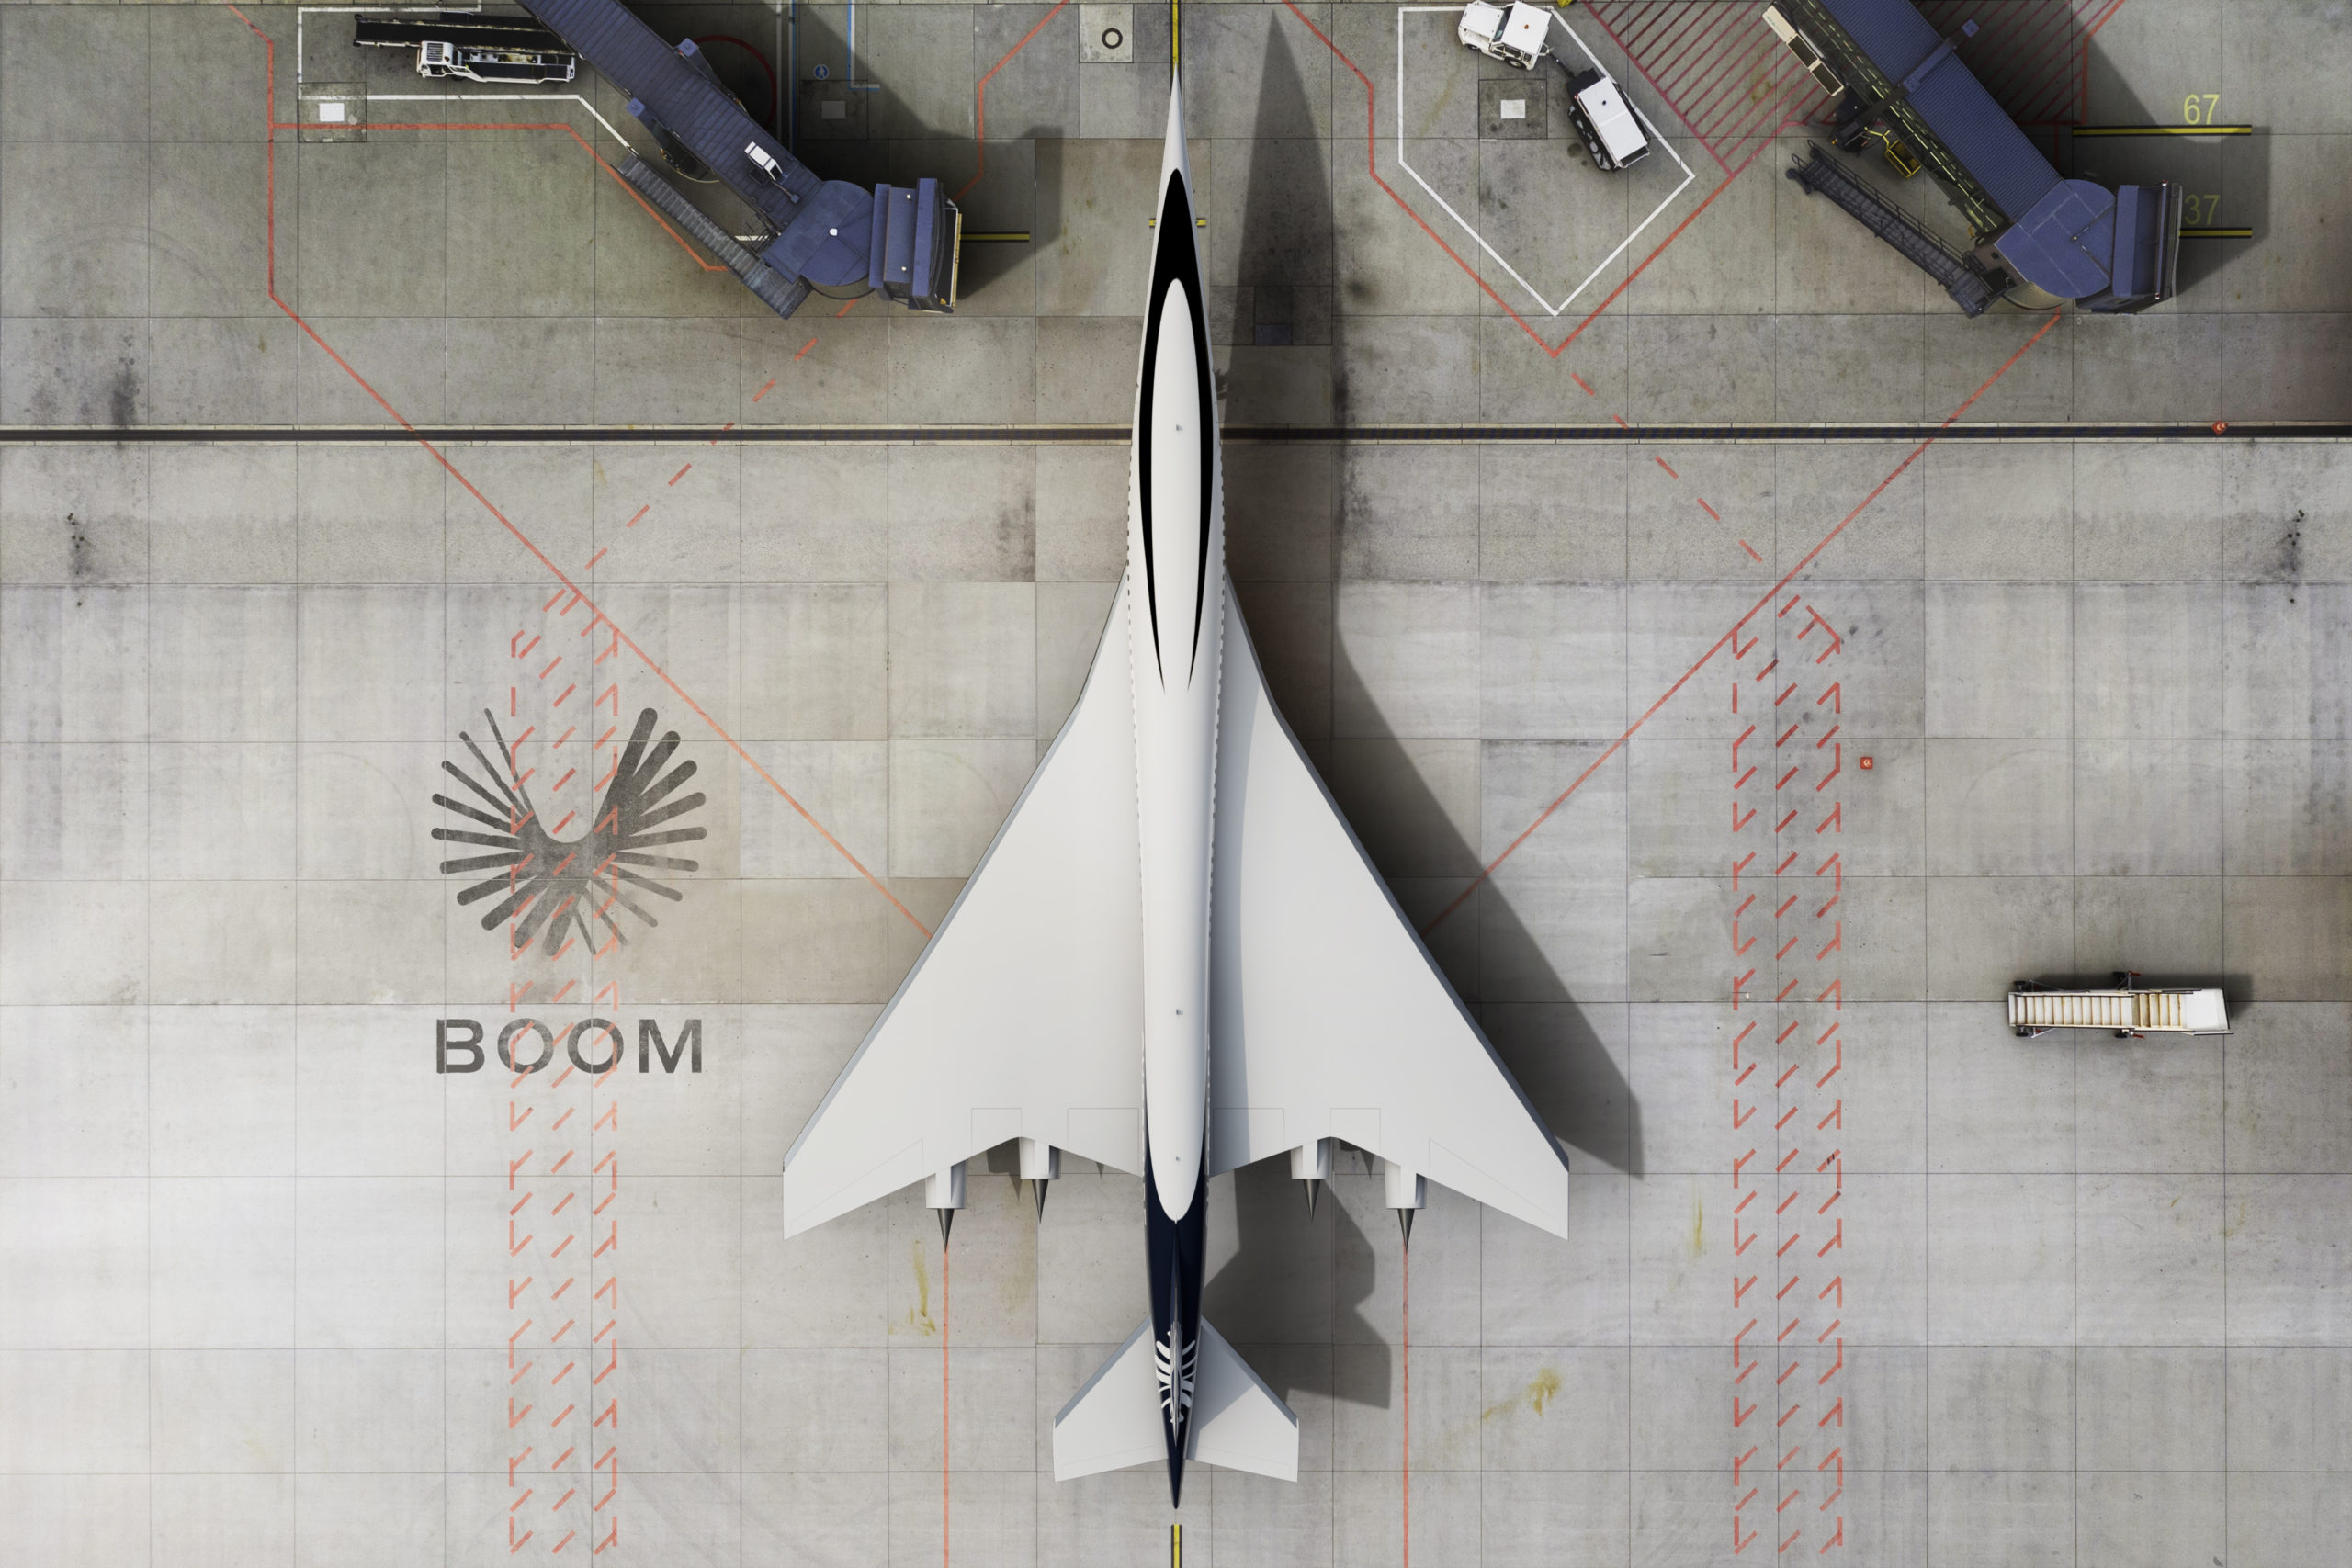 Lietadlo spoločnosti Boom Supersonic - Overture